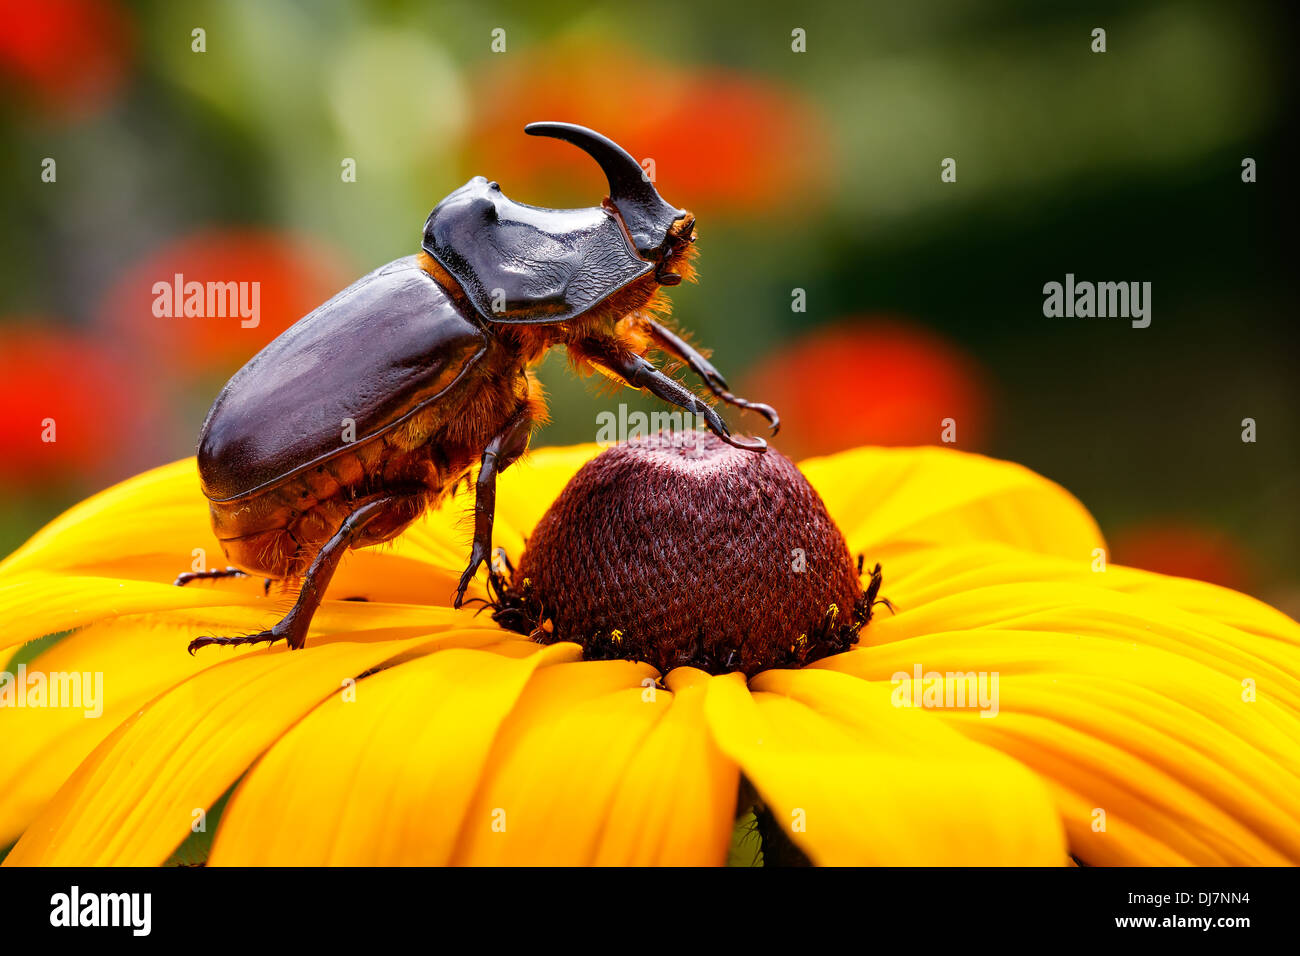 Rhino Beetle on Flower Stock Photo